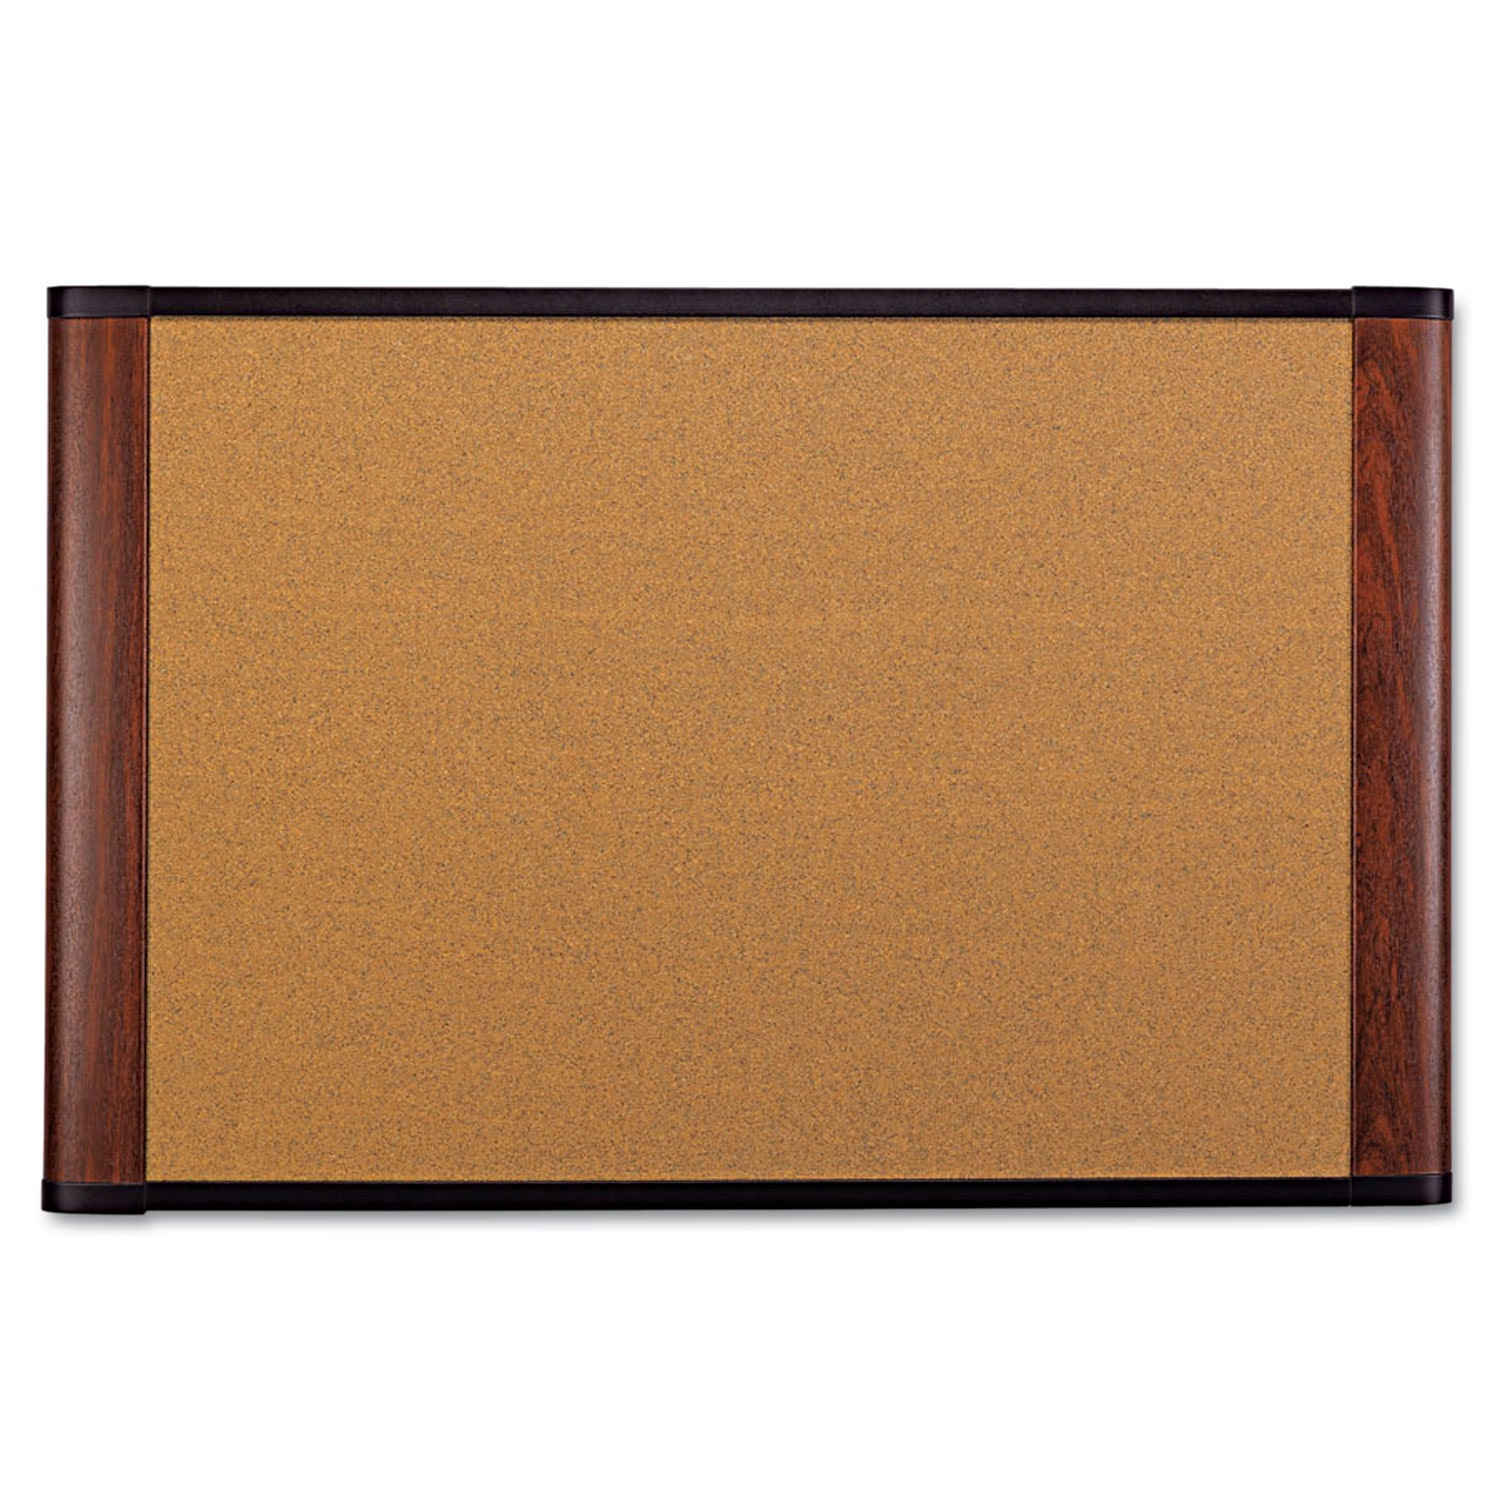 3M Cork Bulletin Board, 72" x 48", Aluminum Frame w/Mahogany Wood-Grained Finish - image 1 of 3